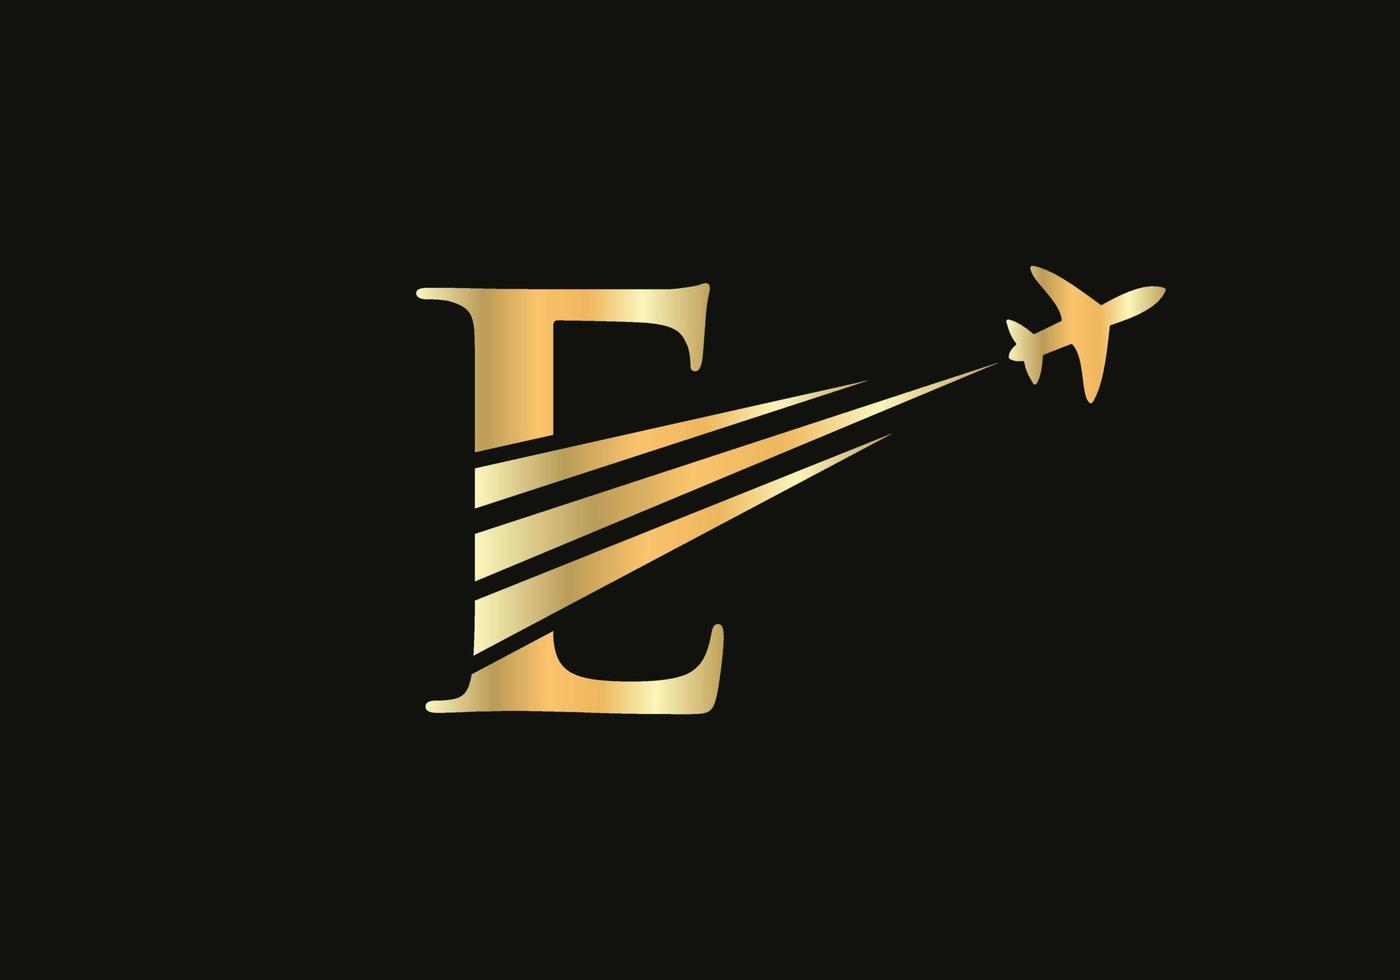 concepto de diseño de logotipo de viaje con letra e con símbolo de avión volador vector